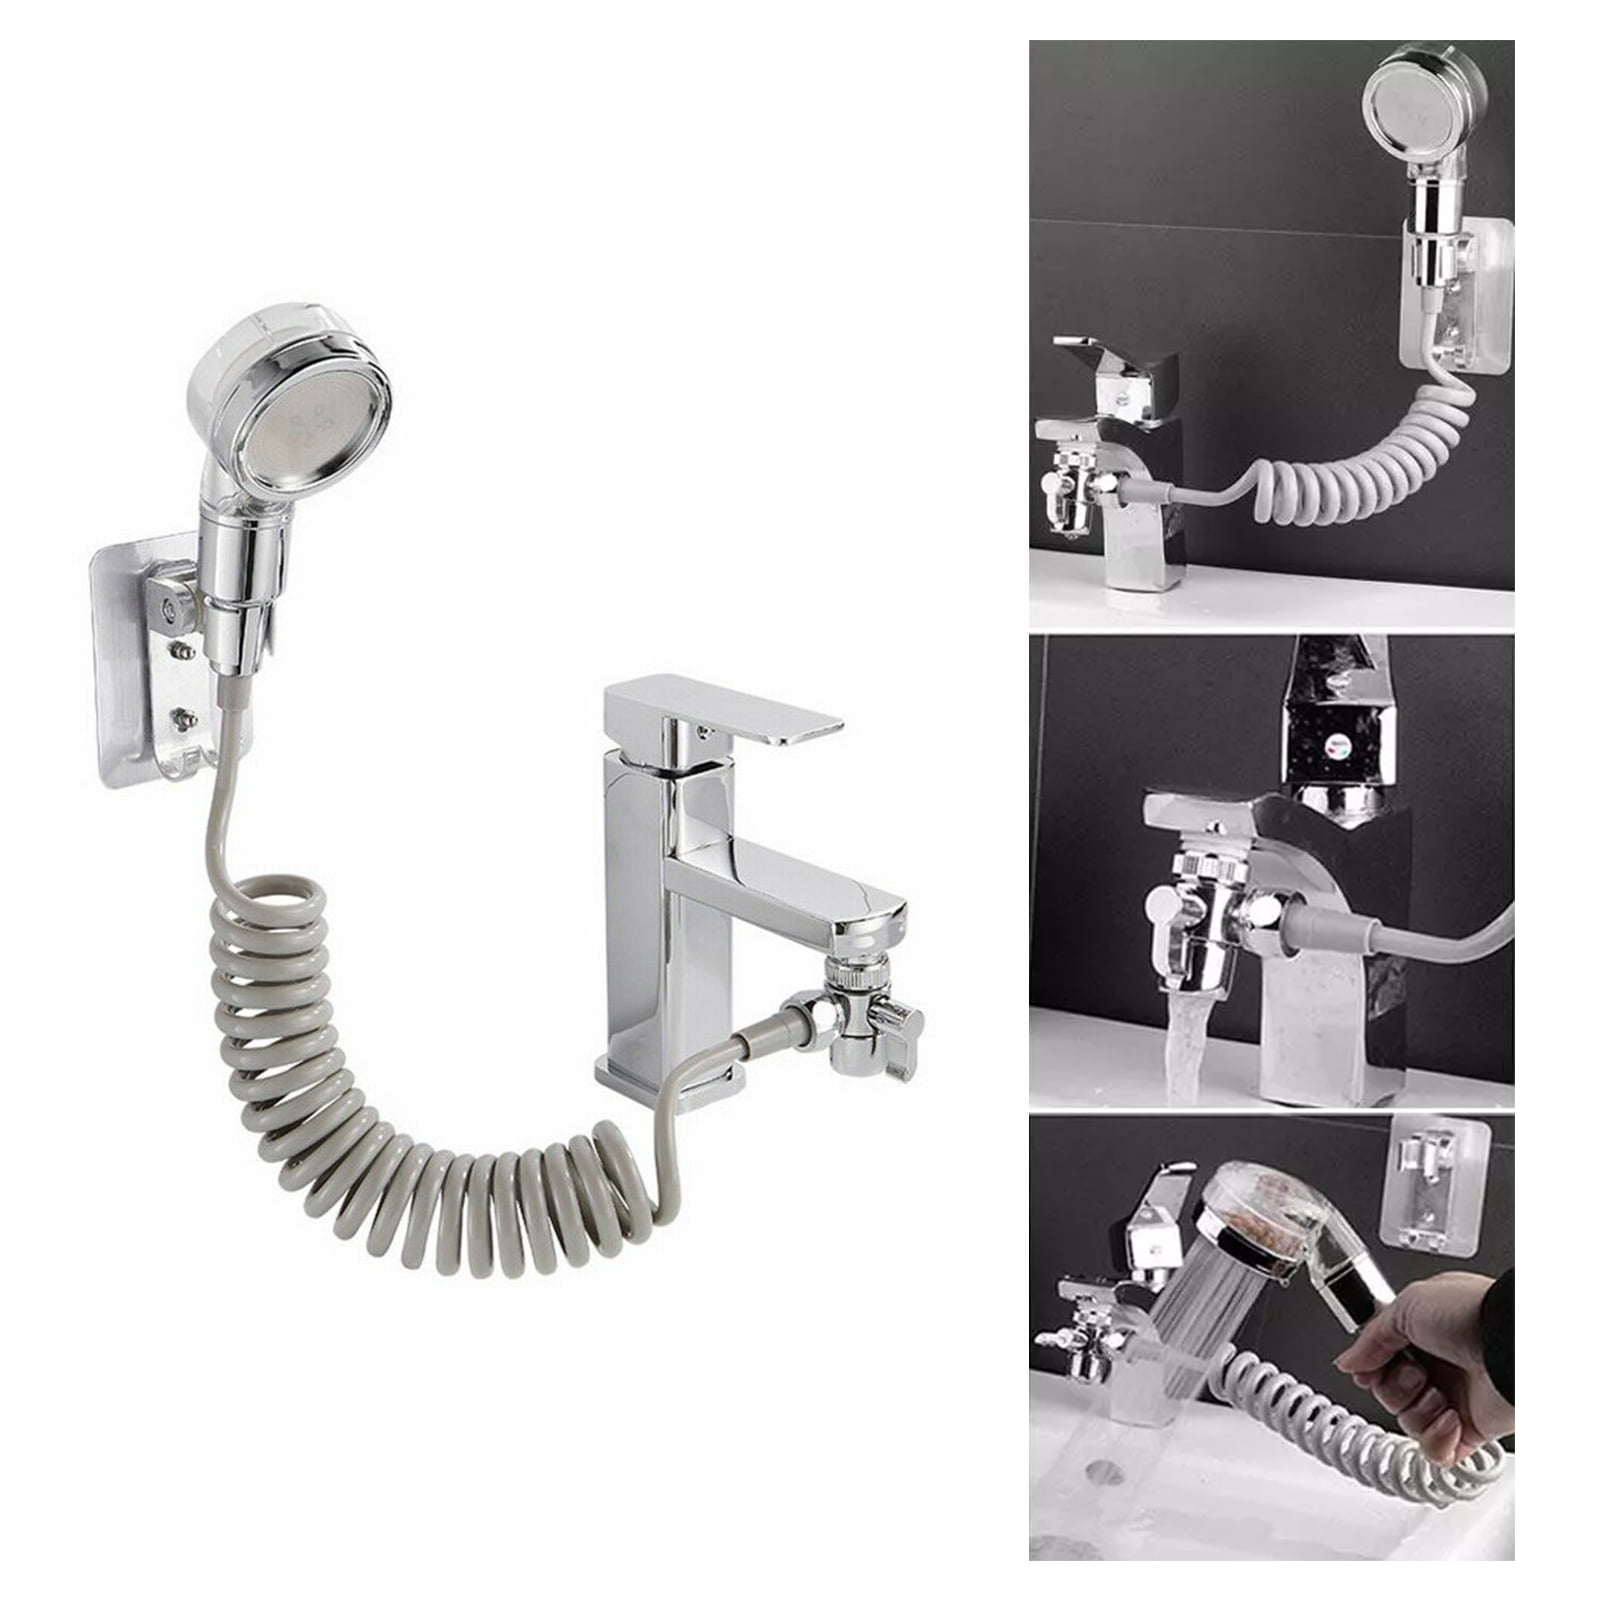 Handspray Kitchen Bathroom Pull Out Faucet Sprayer Shower Water Tap Spray Head Handheld Showerheads G 1/2 Replacement Part